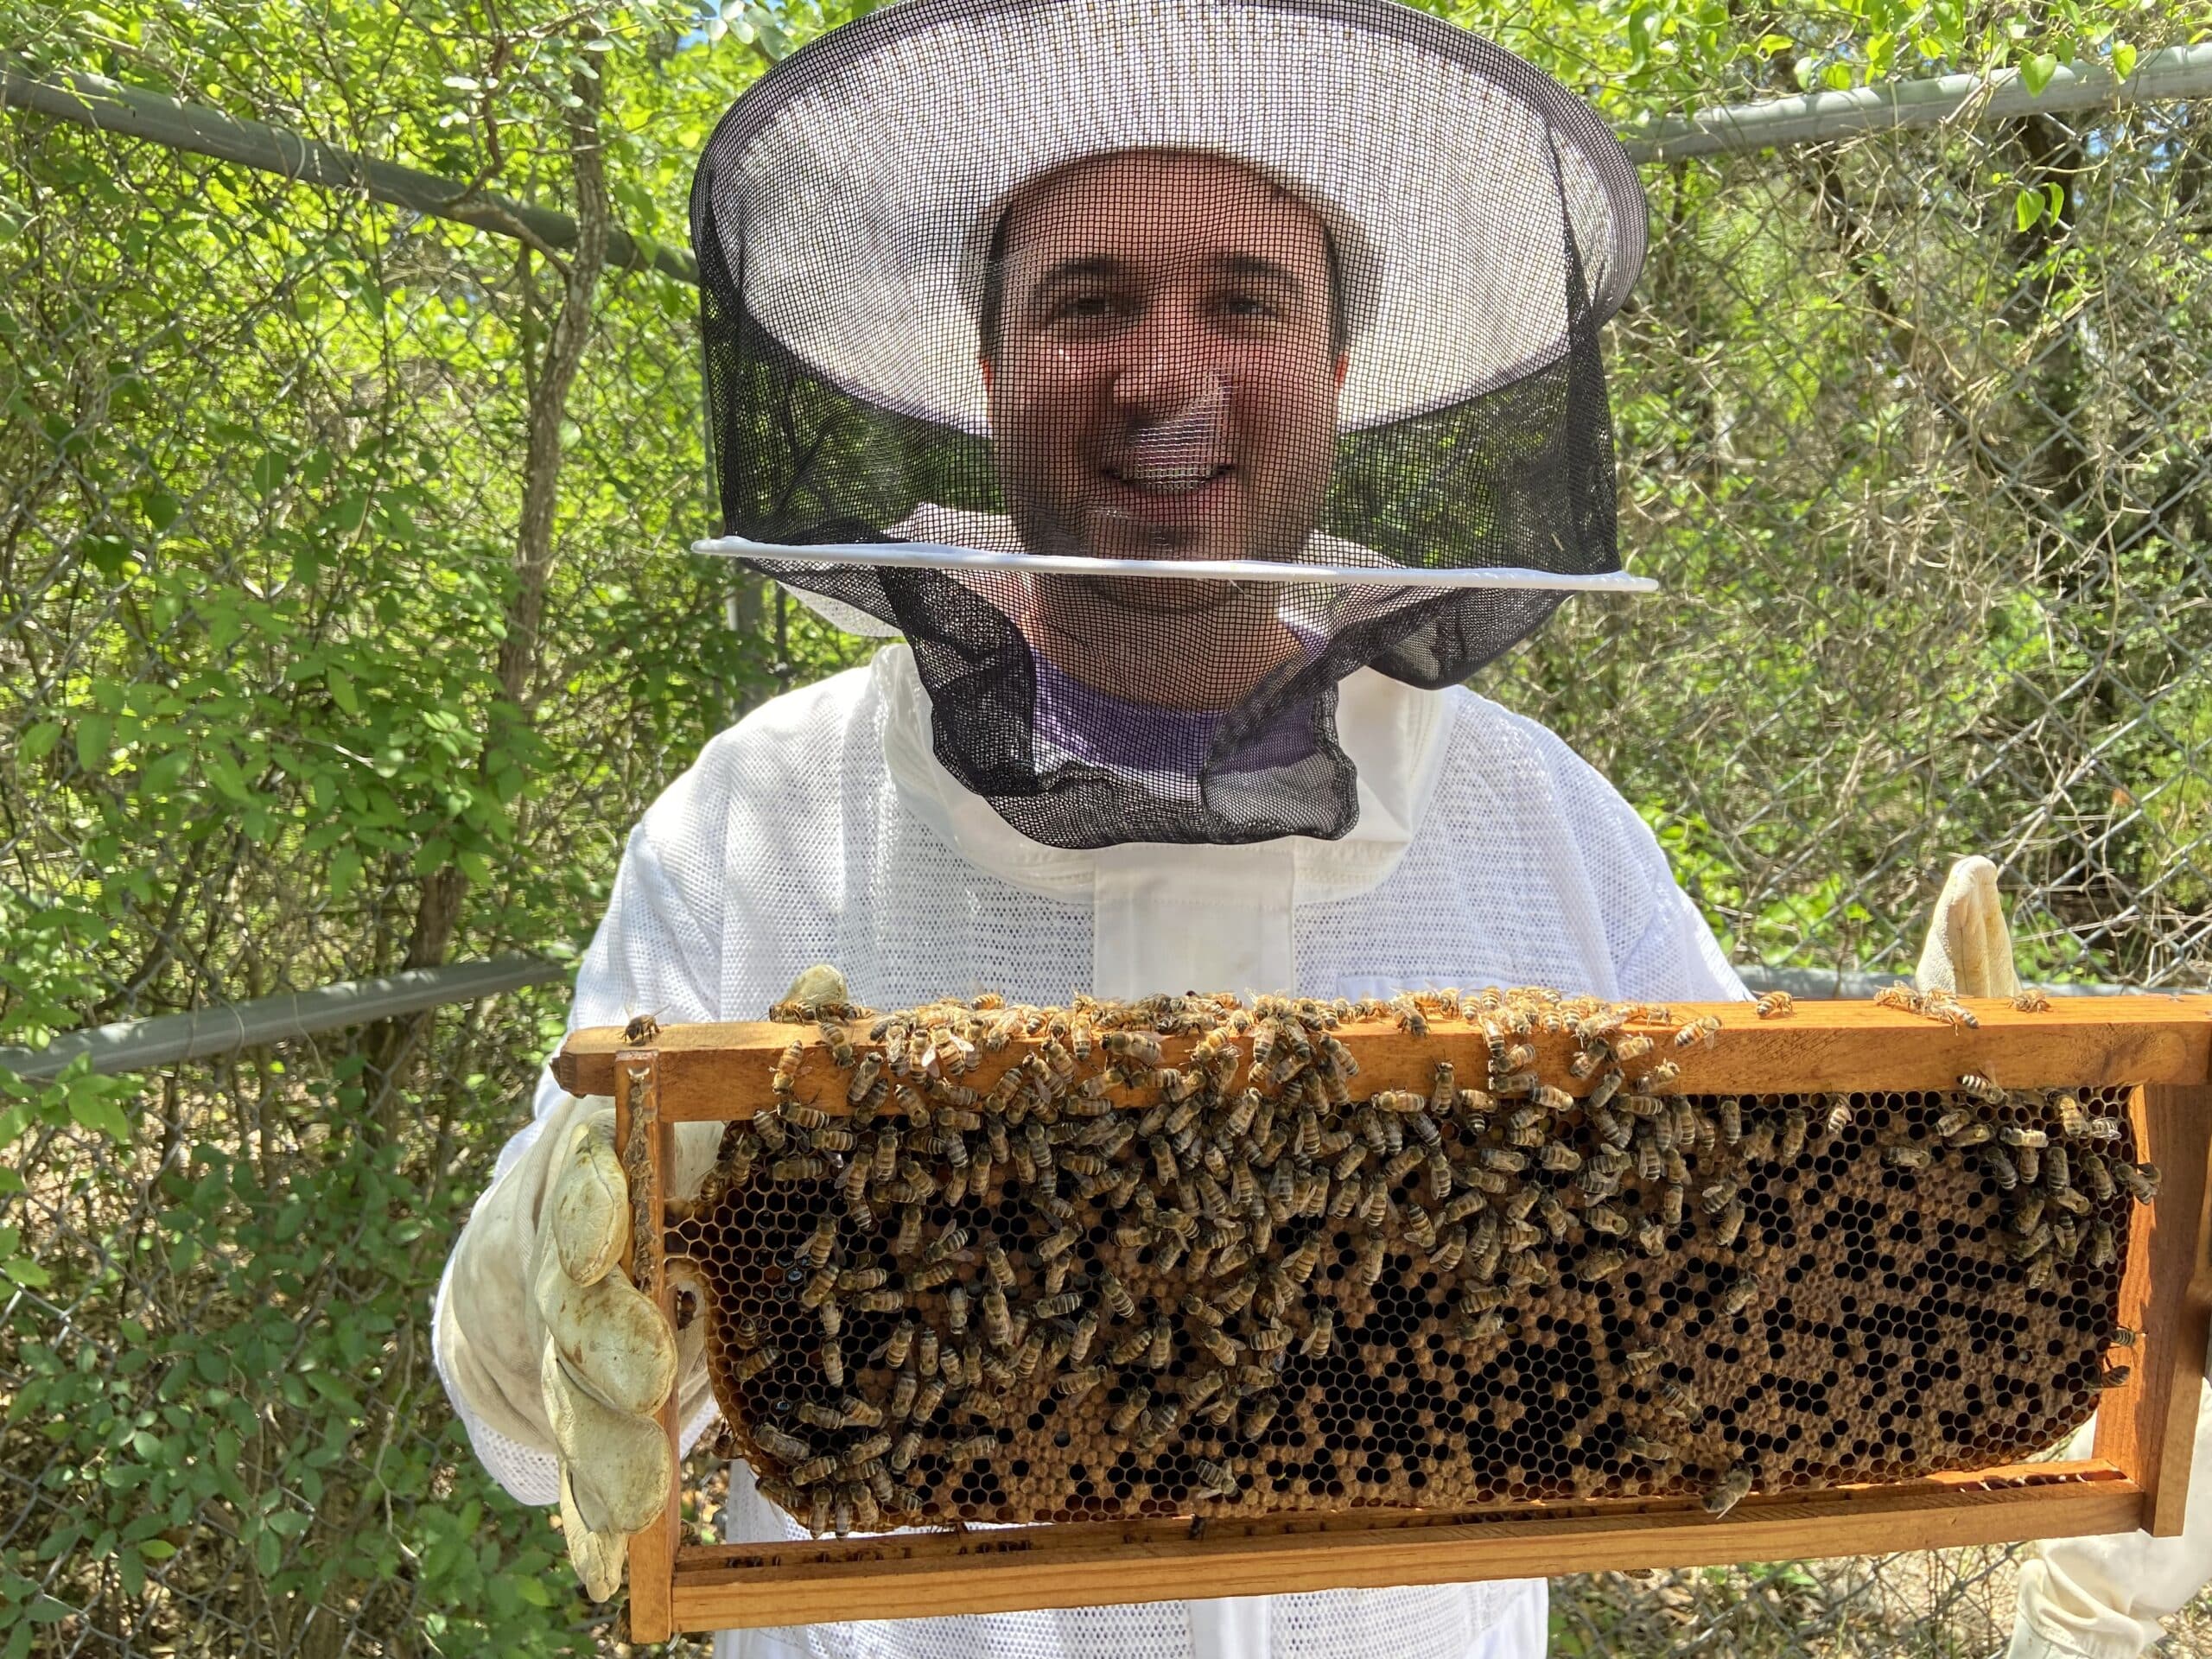 Josh handles some bees. 